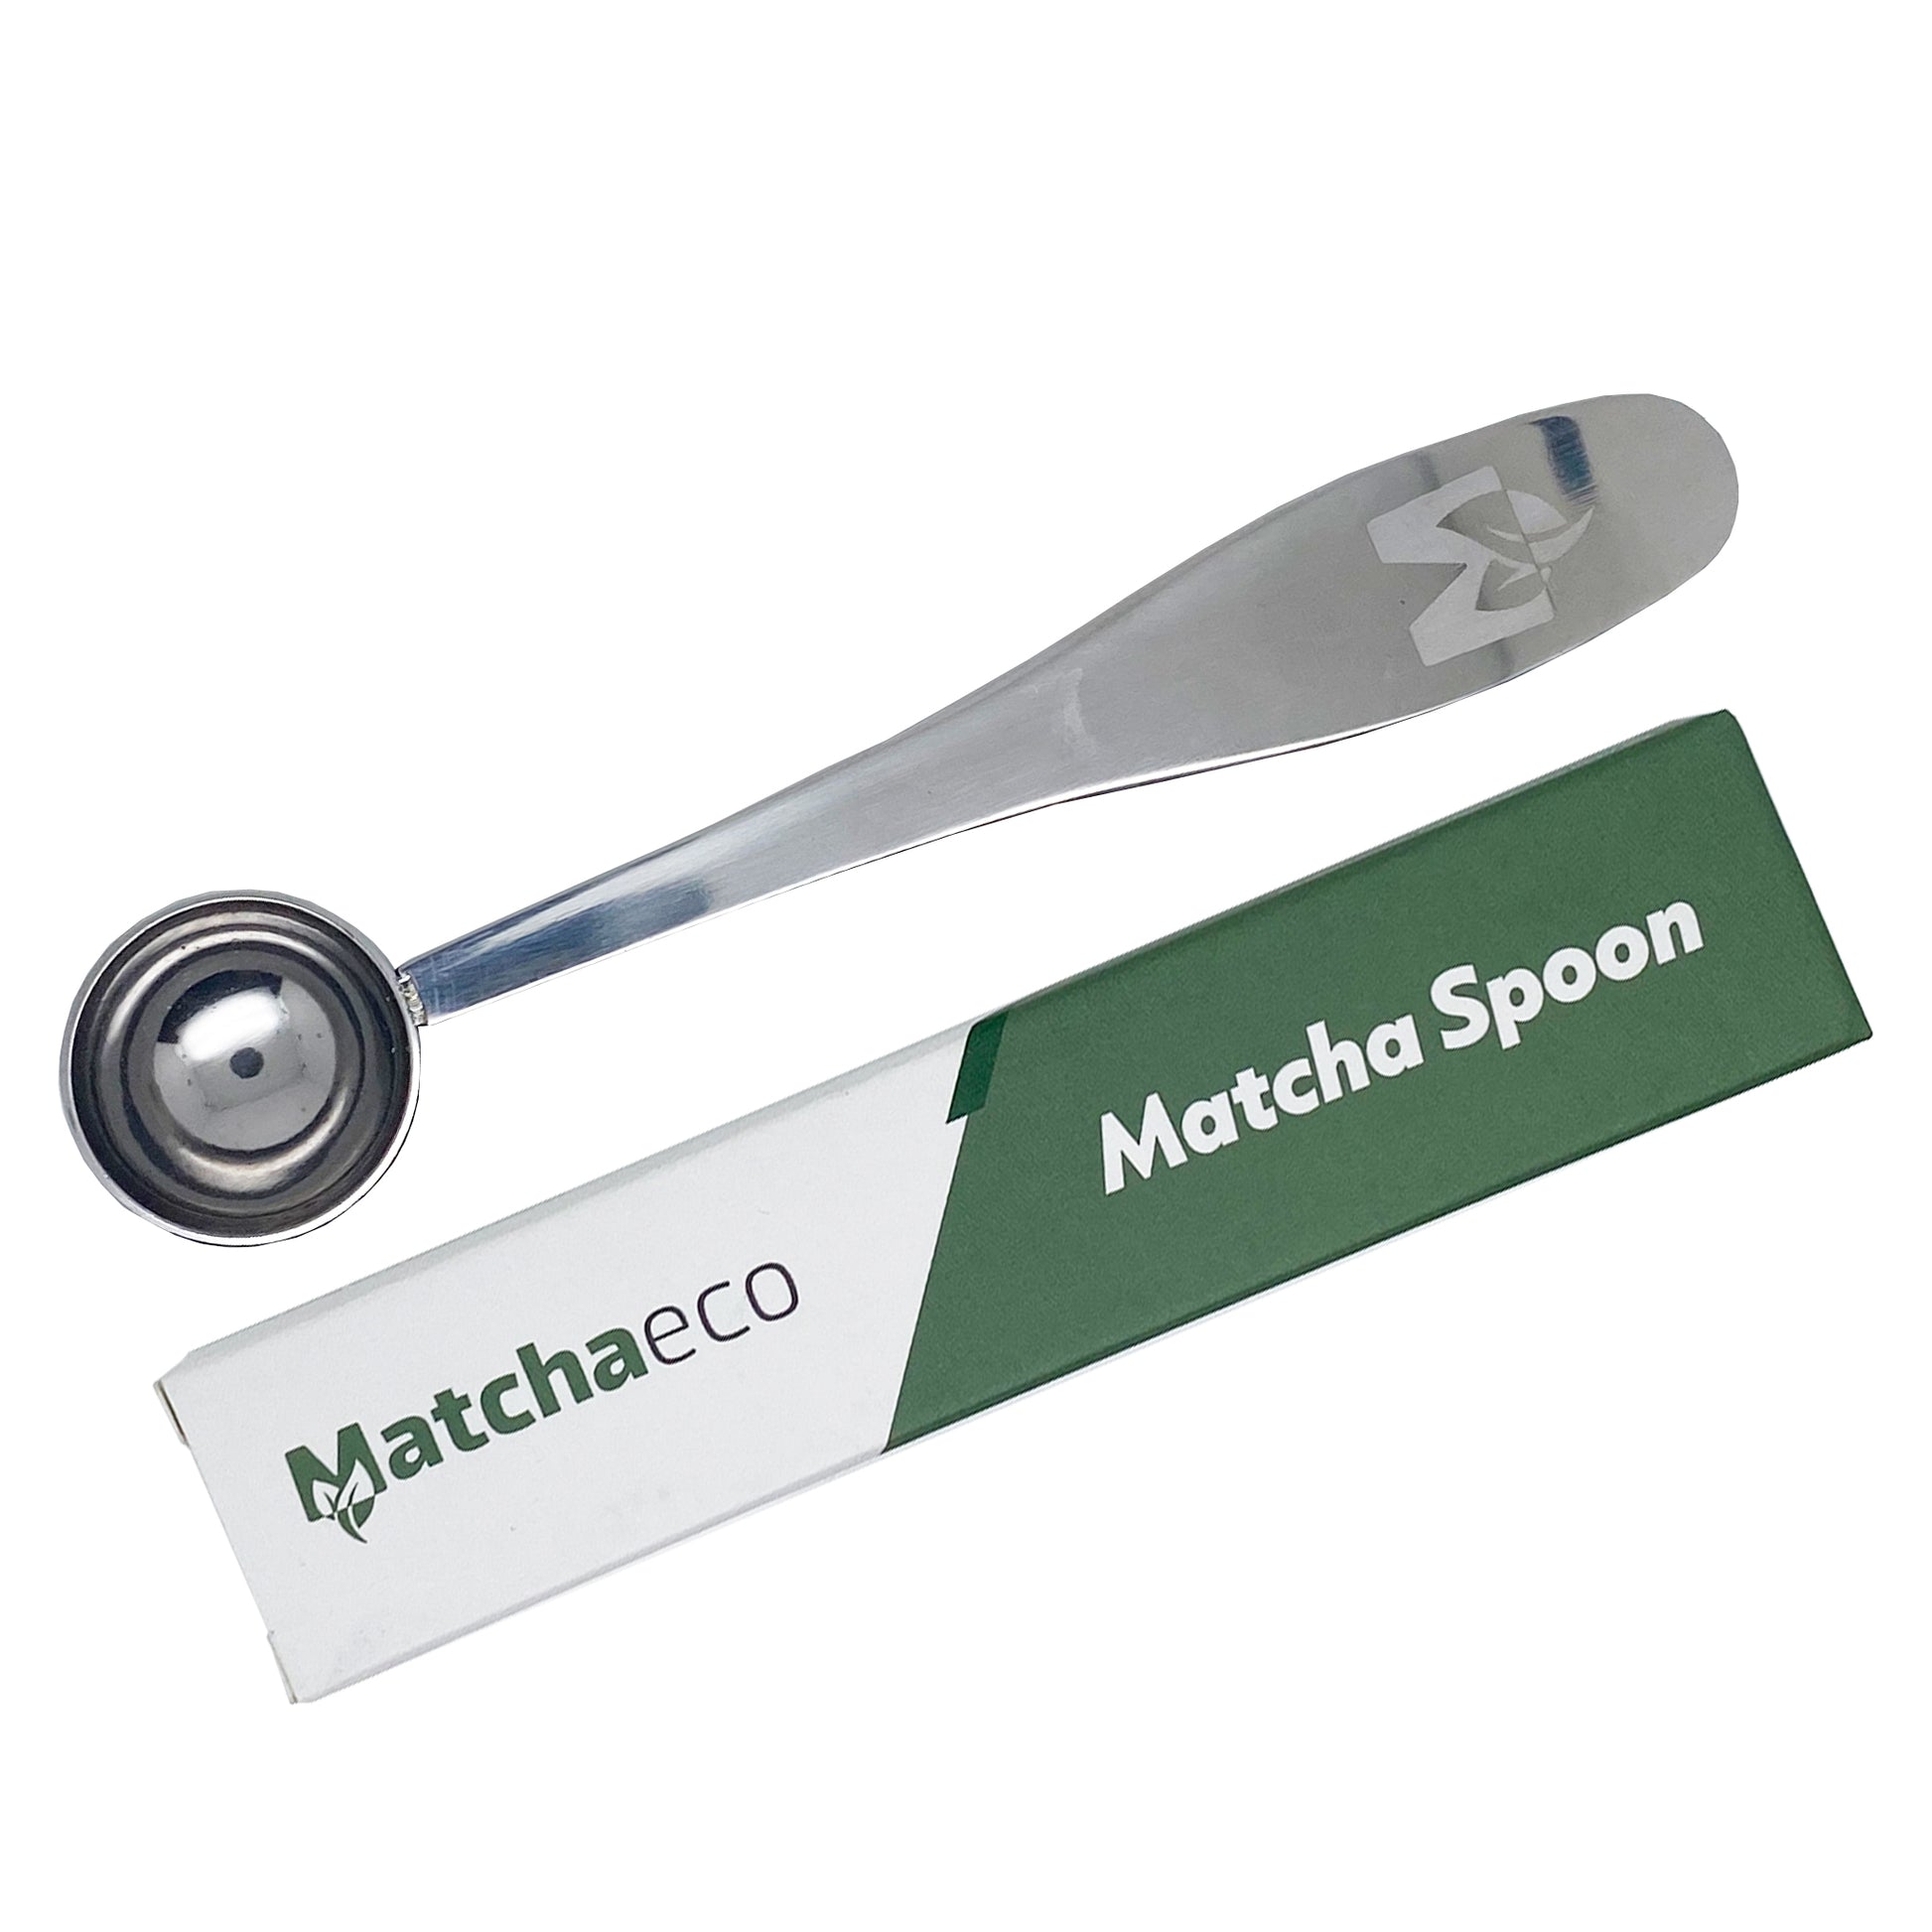 matchaeco spoon